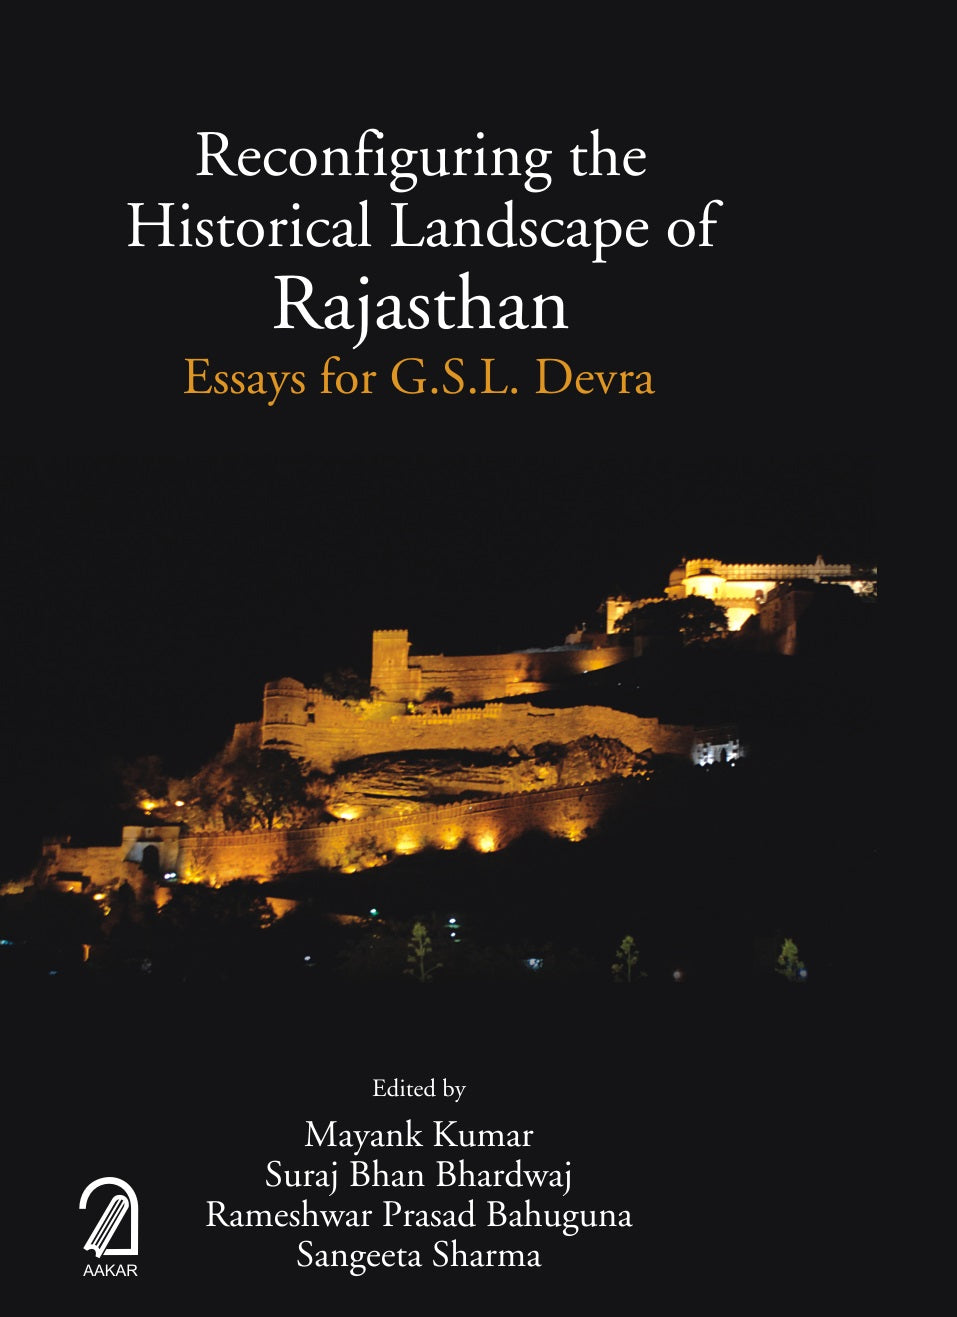 Reconfiguring the Historical Landscape of Rajasthan: Essays for G.S.L. Devra